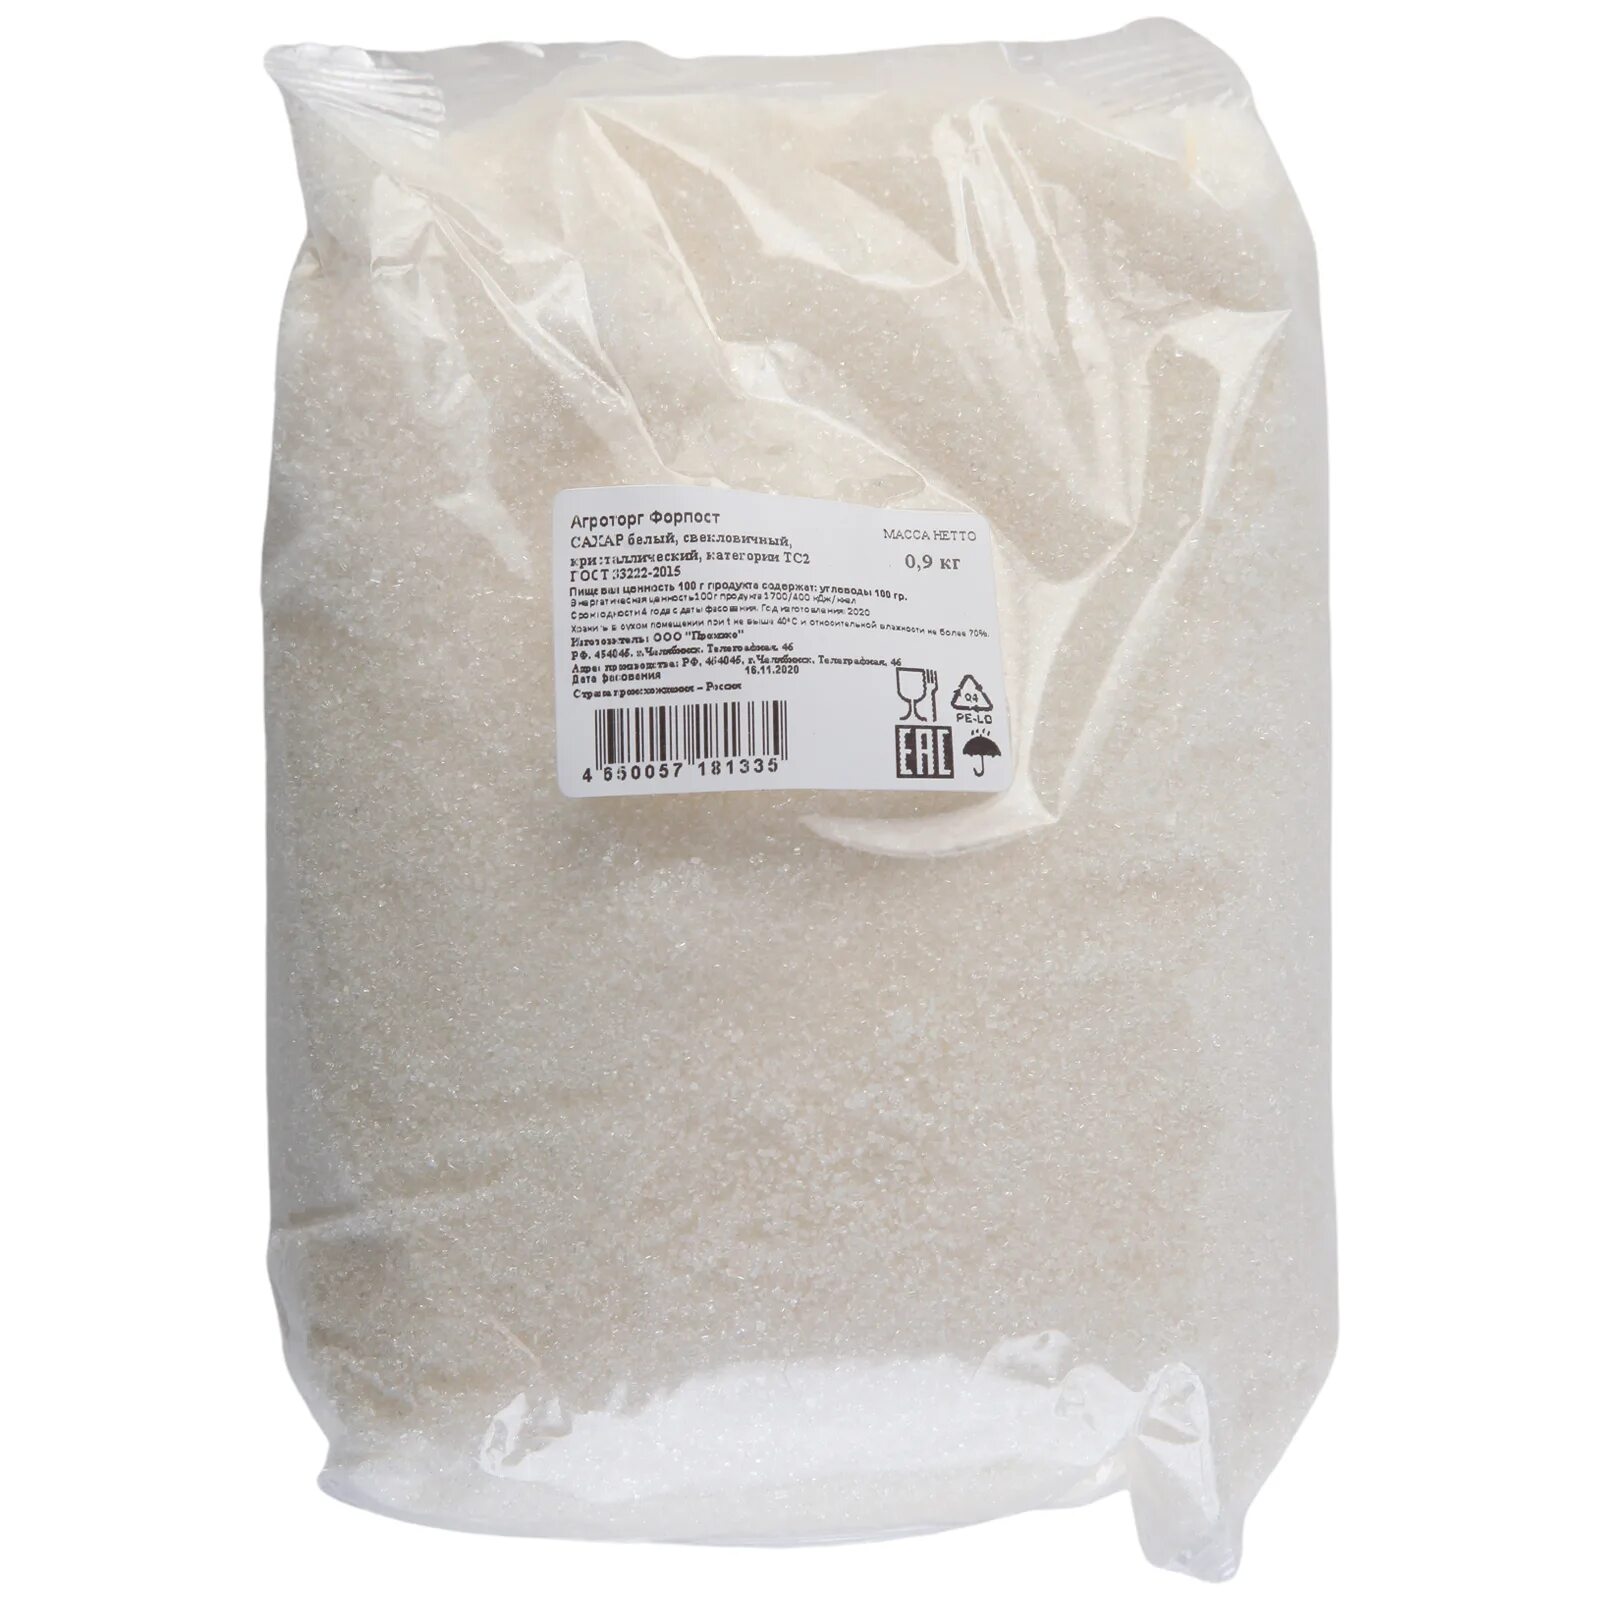 1 кг 900 г. Сахар белый кристаллический тс2. Сахар белый кристаллический свекловичный категории тс2. Сахар белый кристаллический 900г. Сахар белый кристаллический тс2 1 кг.